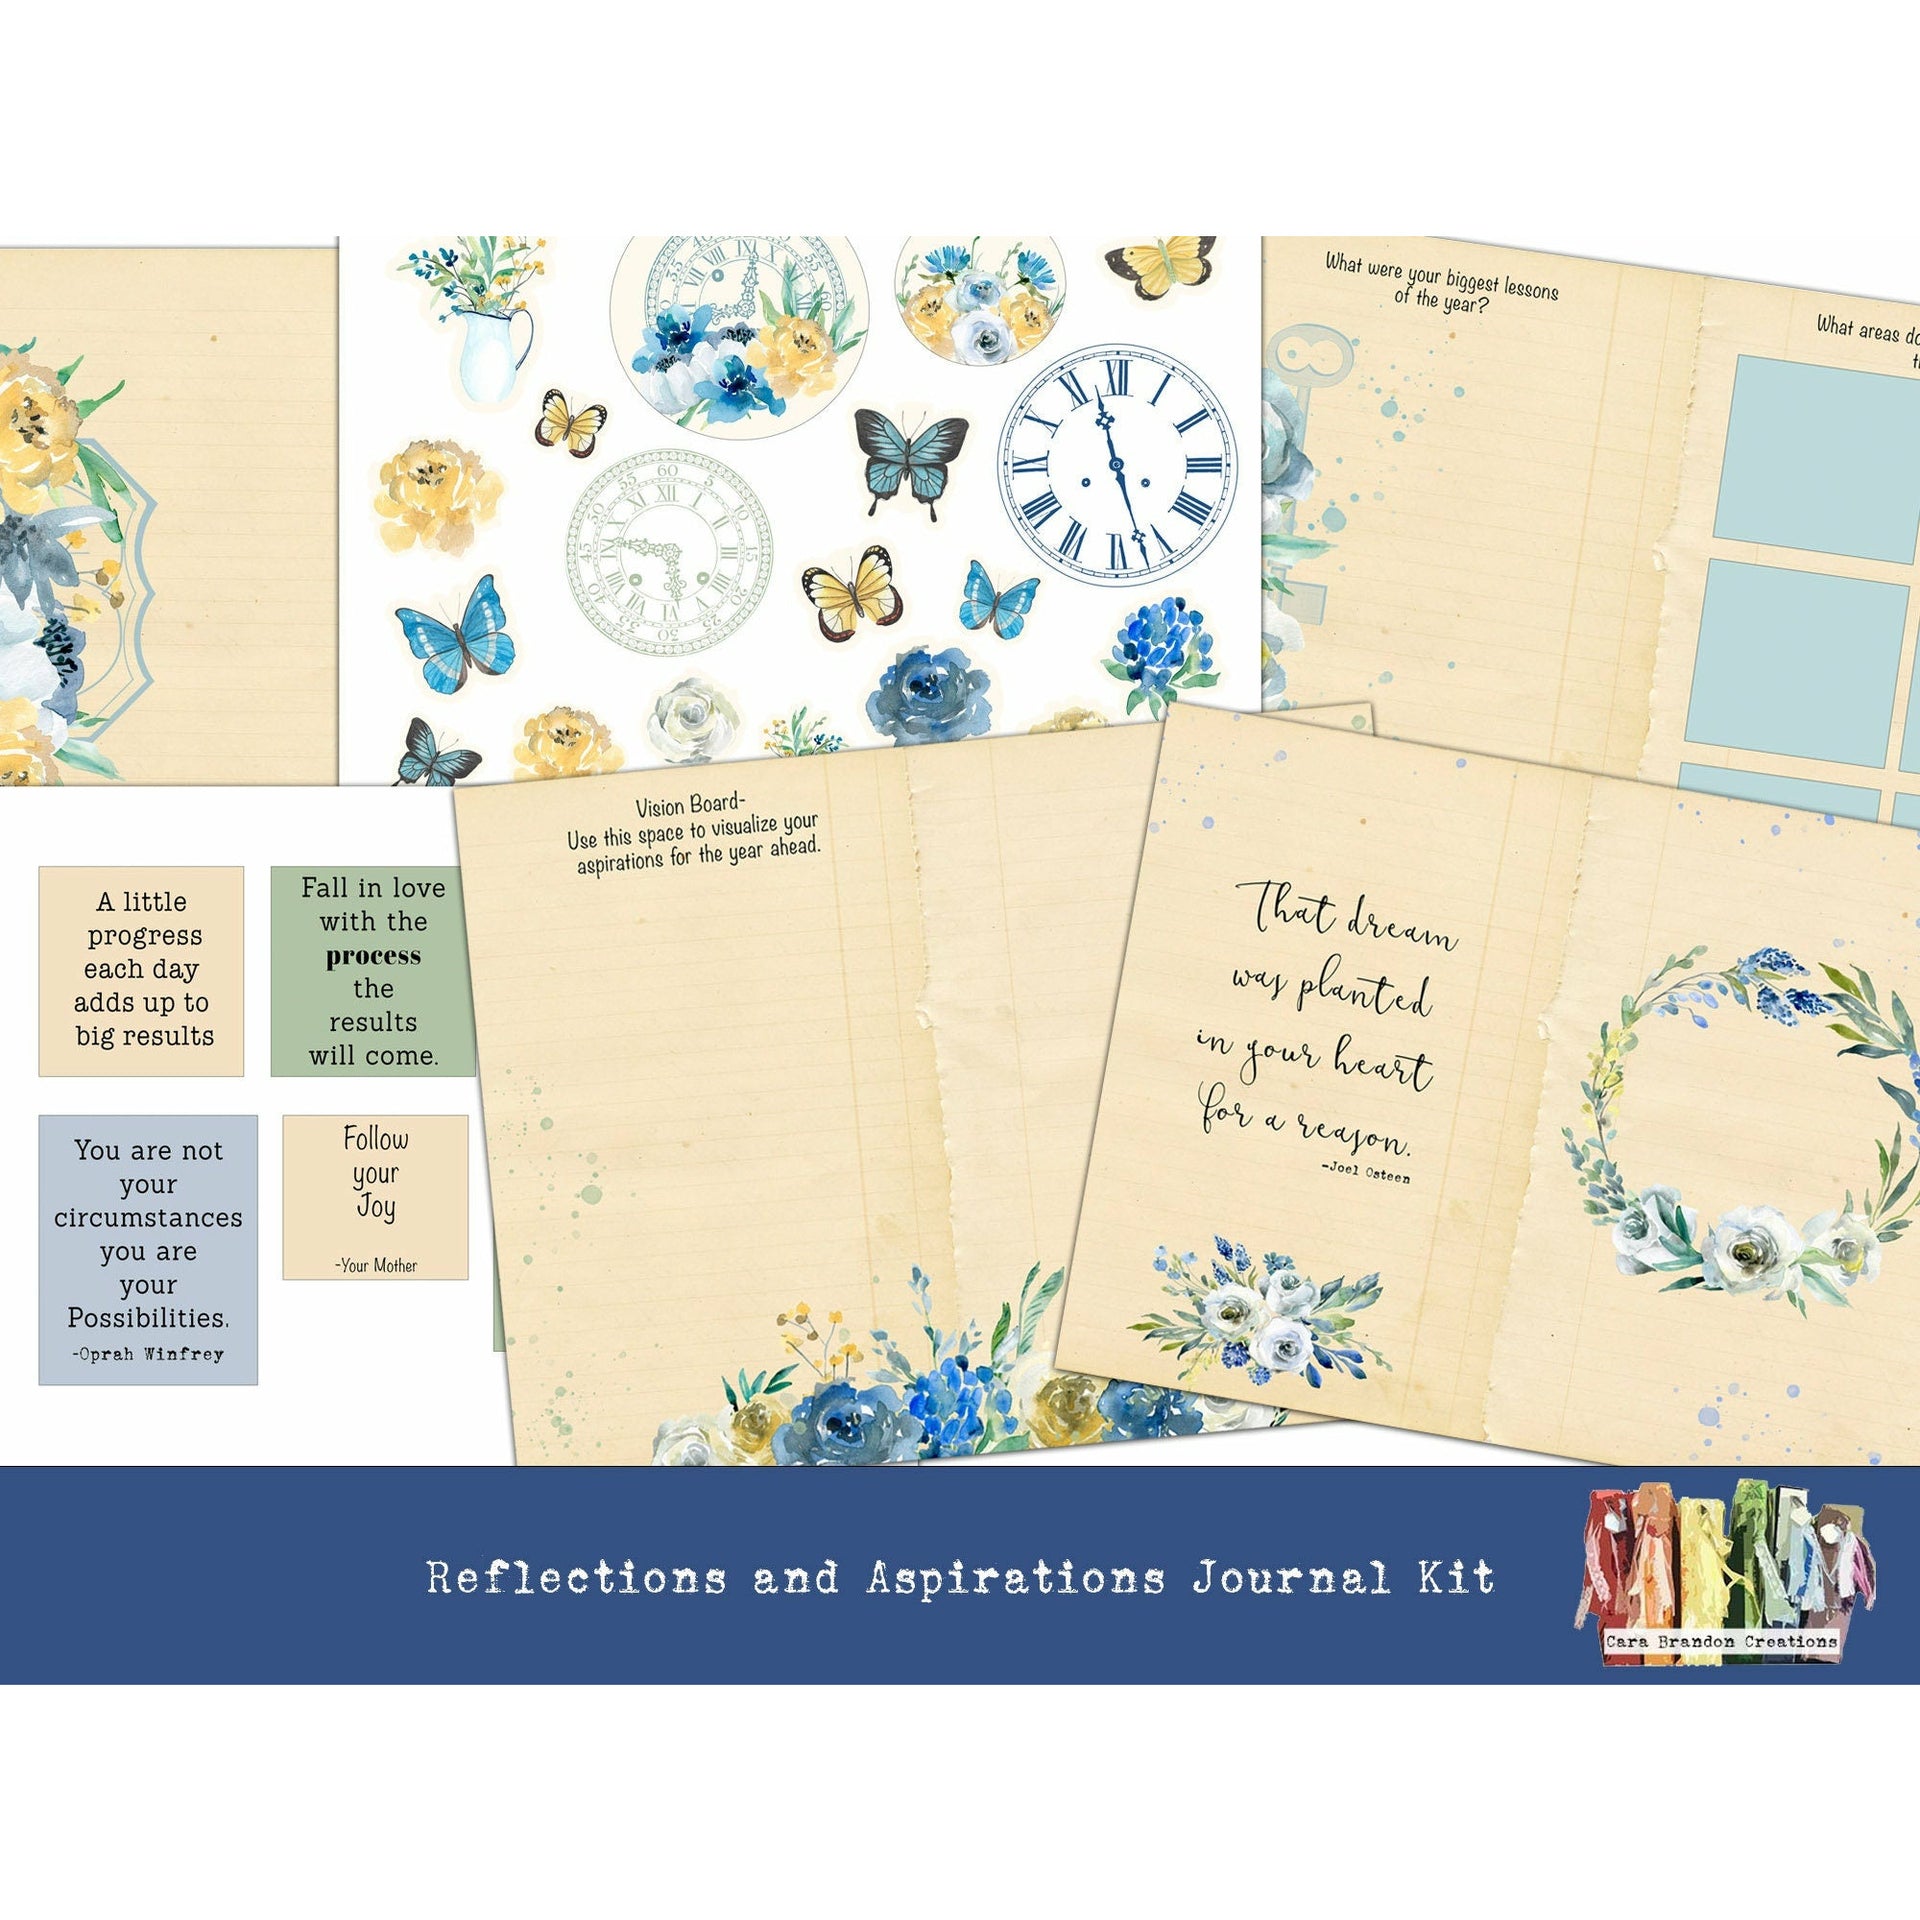 Blue and Yellow Floral Digital Junk Journal kit – Cara Brandon Creations